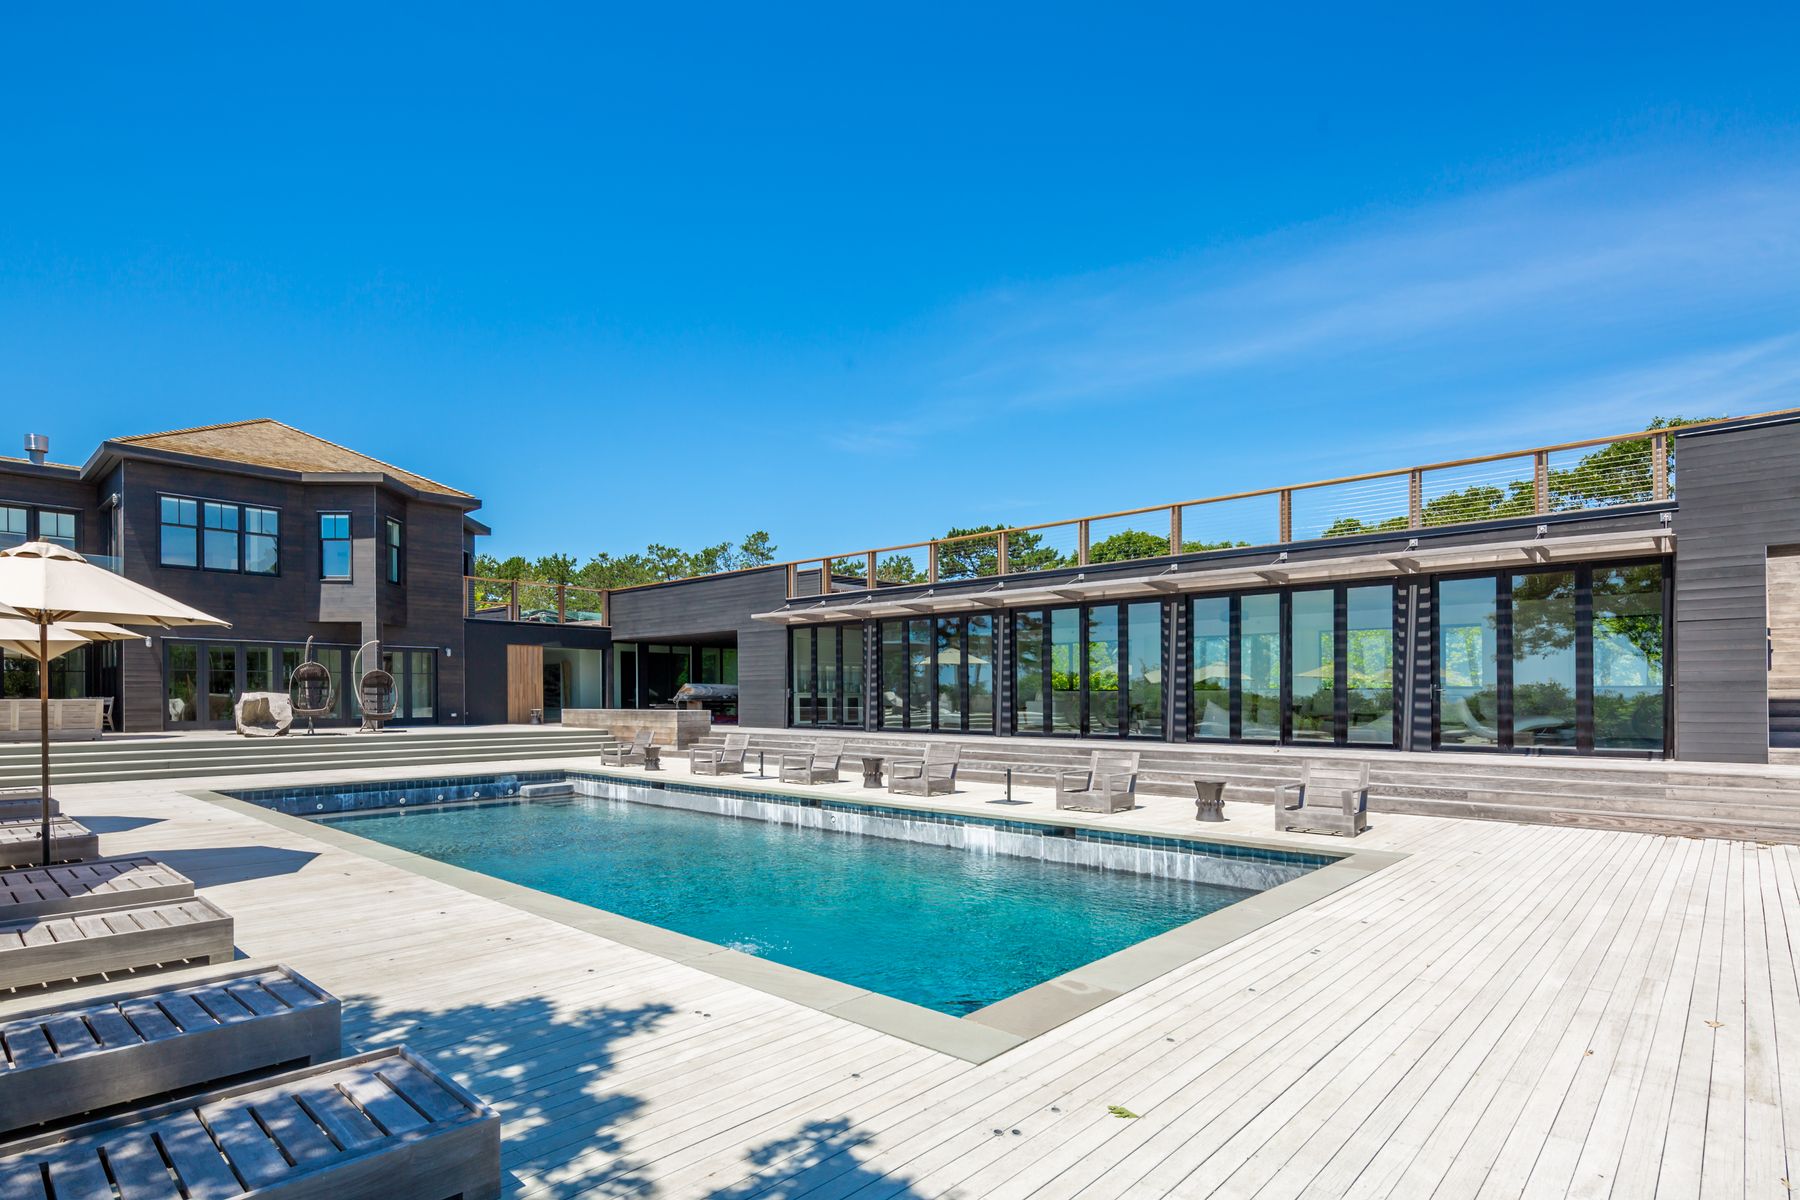 res4-resolution-4-architecture-modern-modular-house-prefab-amagansett-addition-exterior-lounge-pool-deck-trellis-shade.jpg